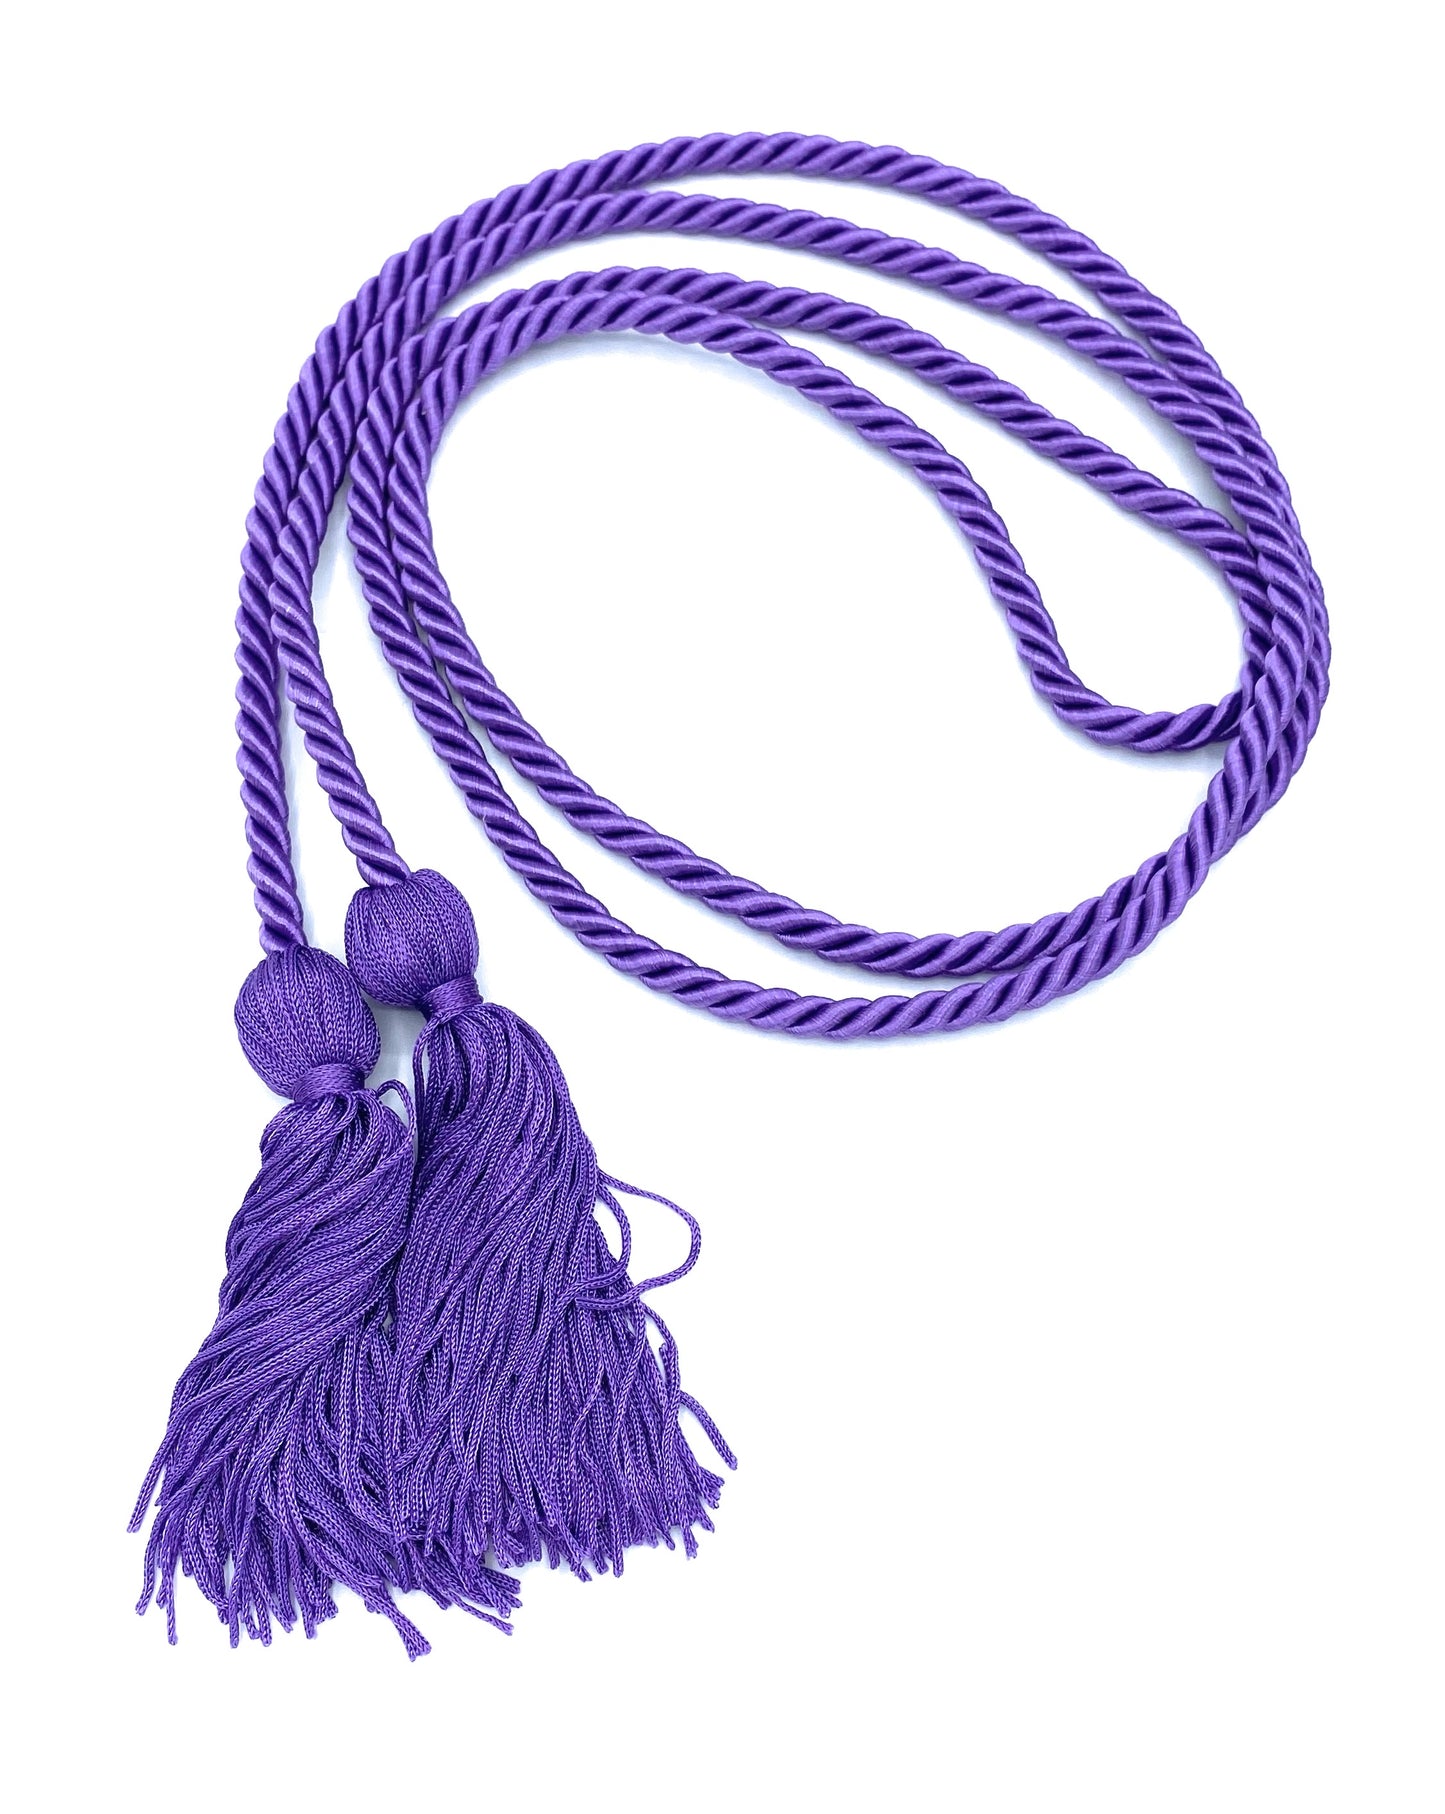 Purple Honor Cords - Honor Cord Source 